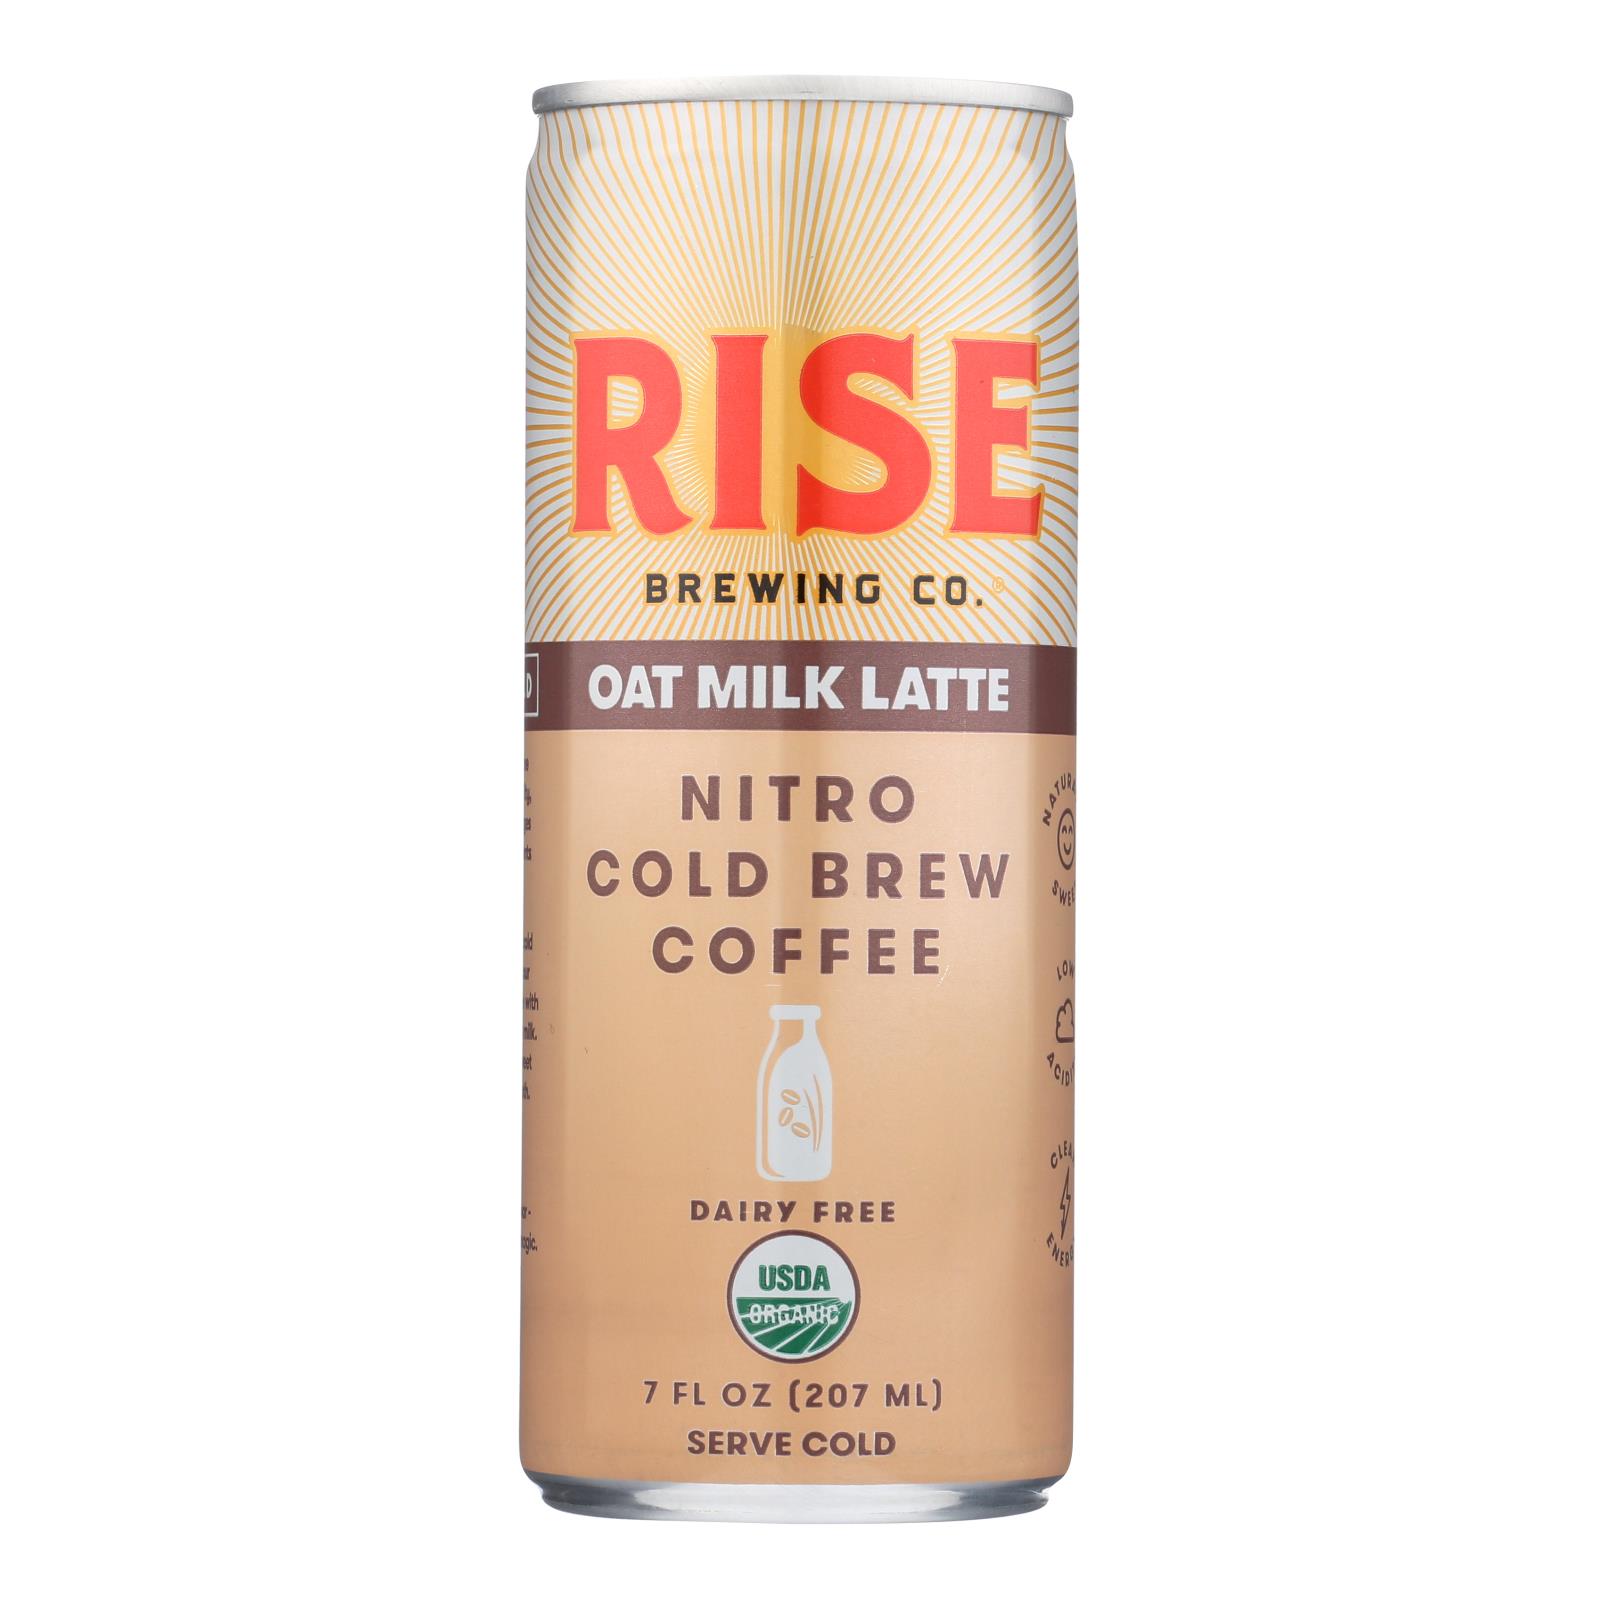 Rise Brewing Co. Nitro Cold Brew Coffee, Oat Milk Latte - 12개 묶음상품 - 7 FZ